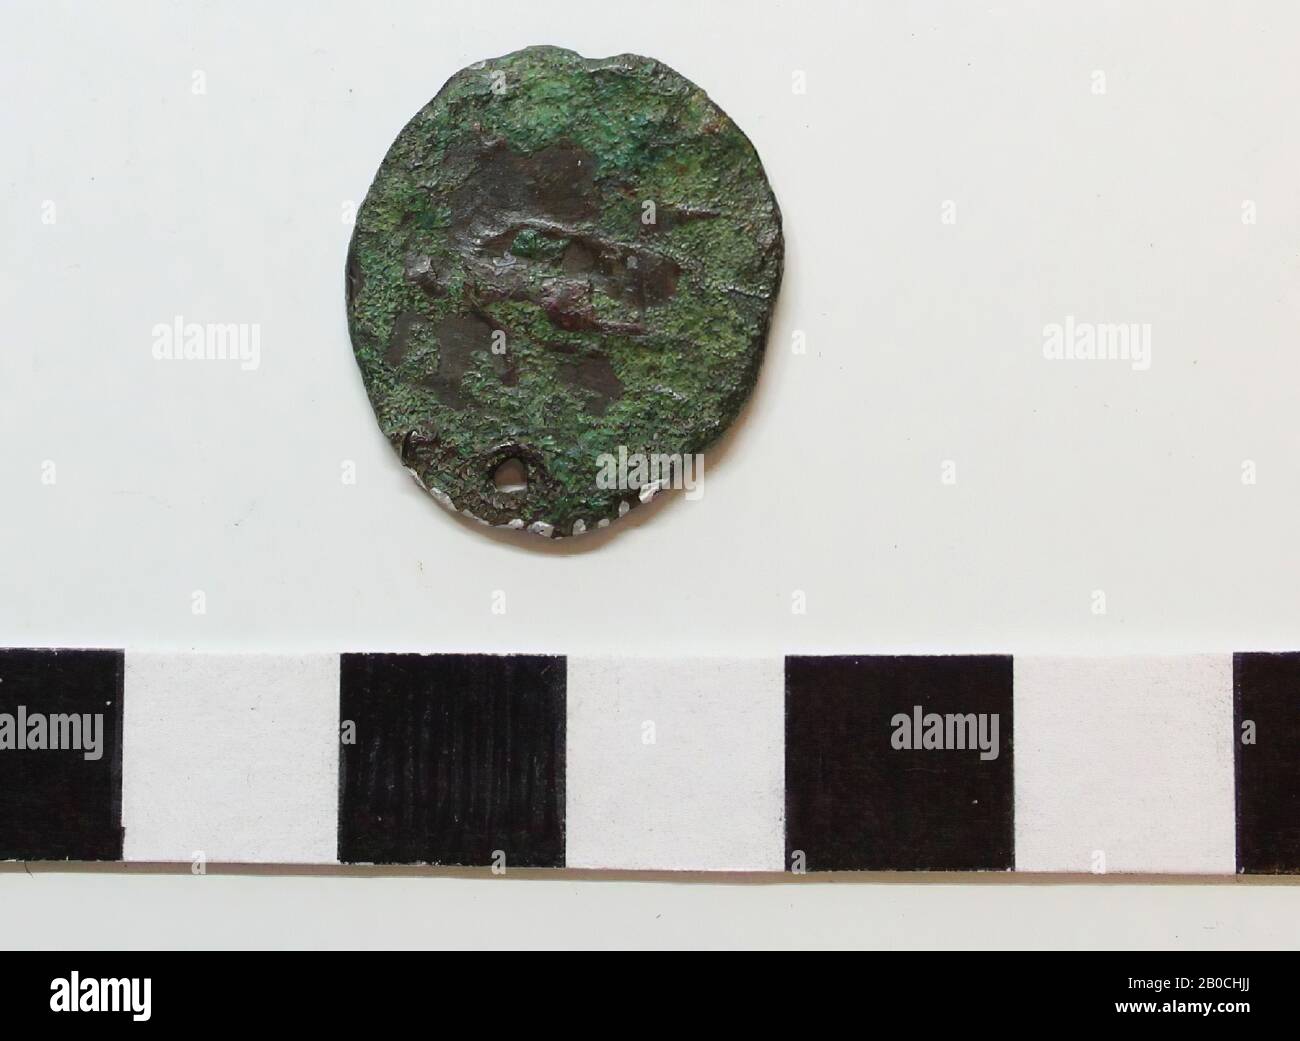 coin, metal, 2.1 x 1.7 x 0.1 cm, Roman, France Stock Photo